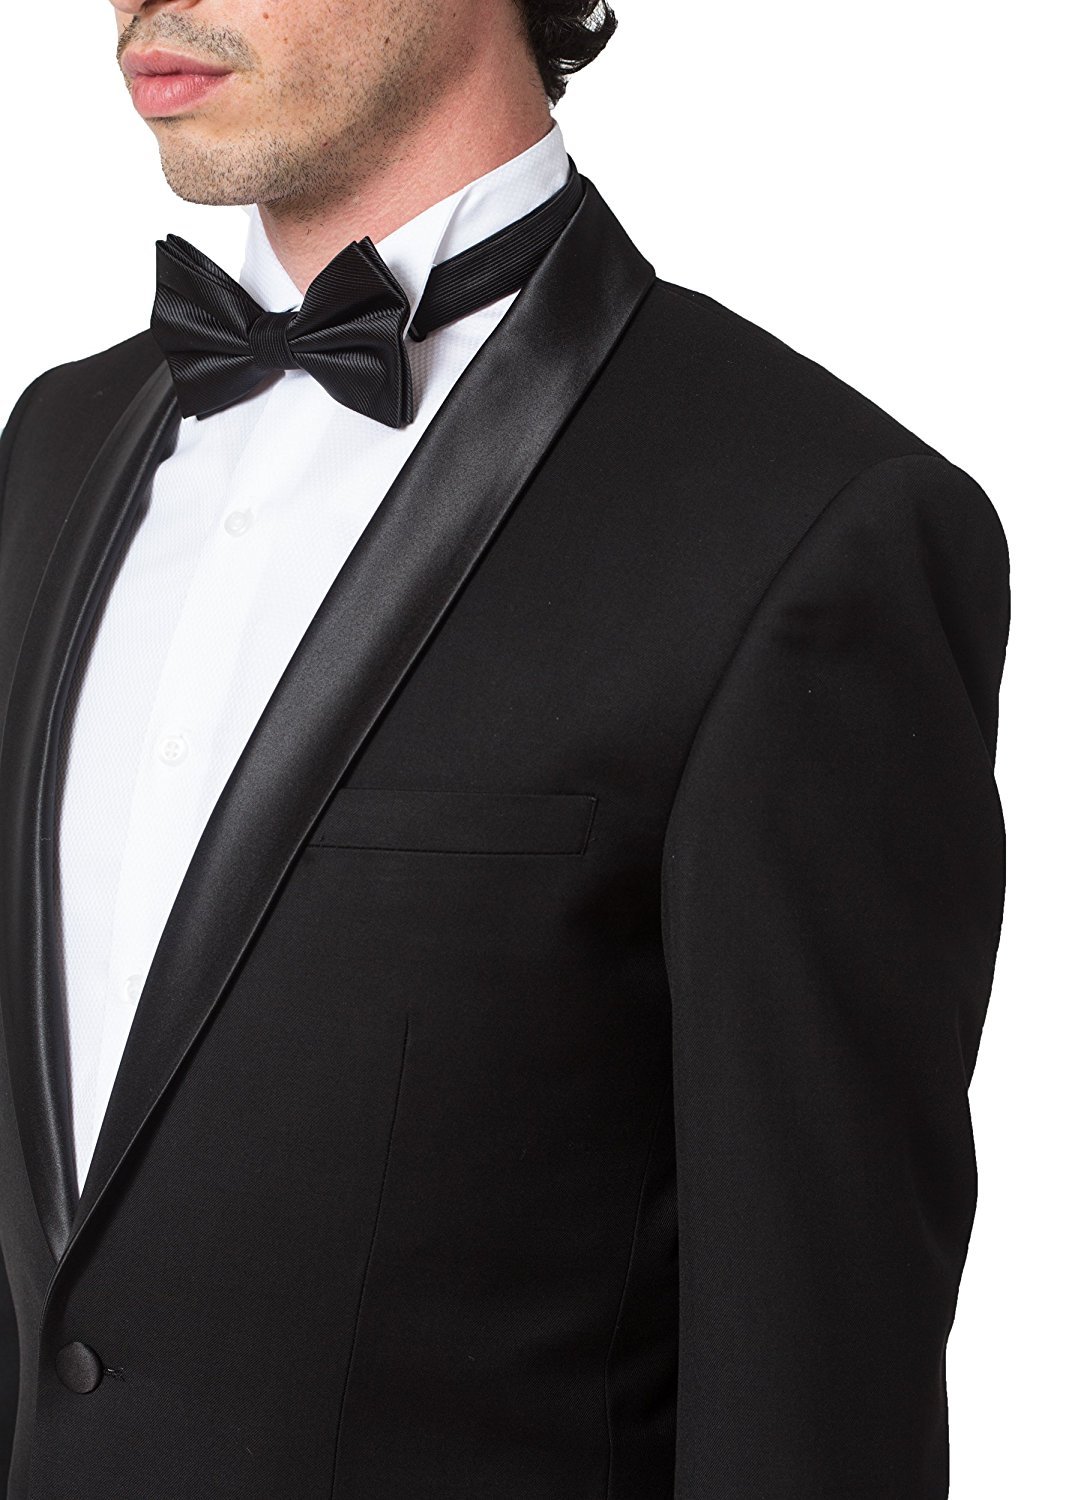 Giorgio Fiorelli Men’s G47815/1 One Button Modern Fit Two-Piece Shawl Collar Tuxedo Suit Set - Black - 42S - image 4 of 5